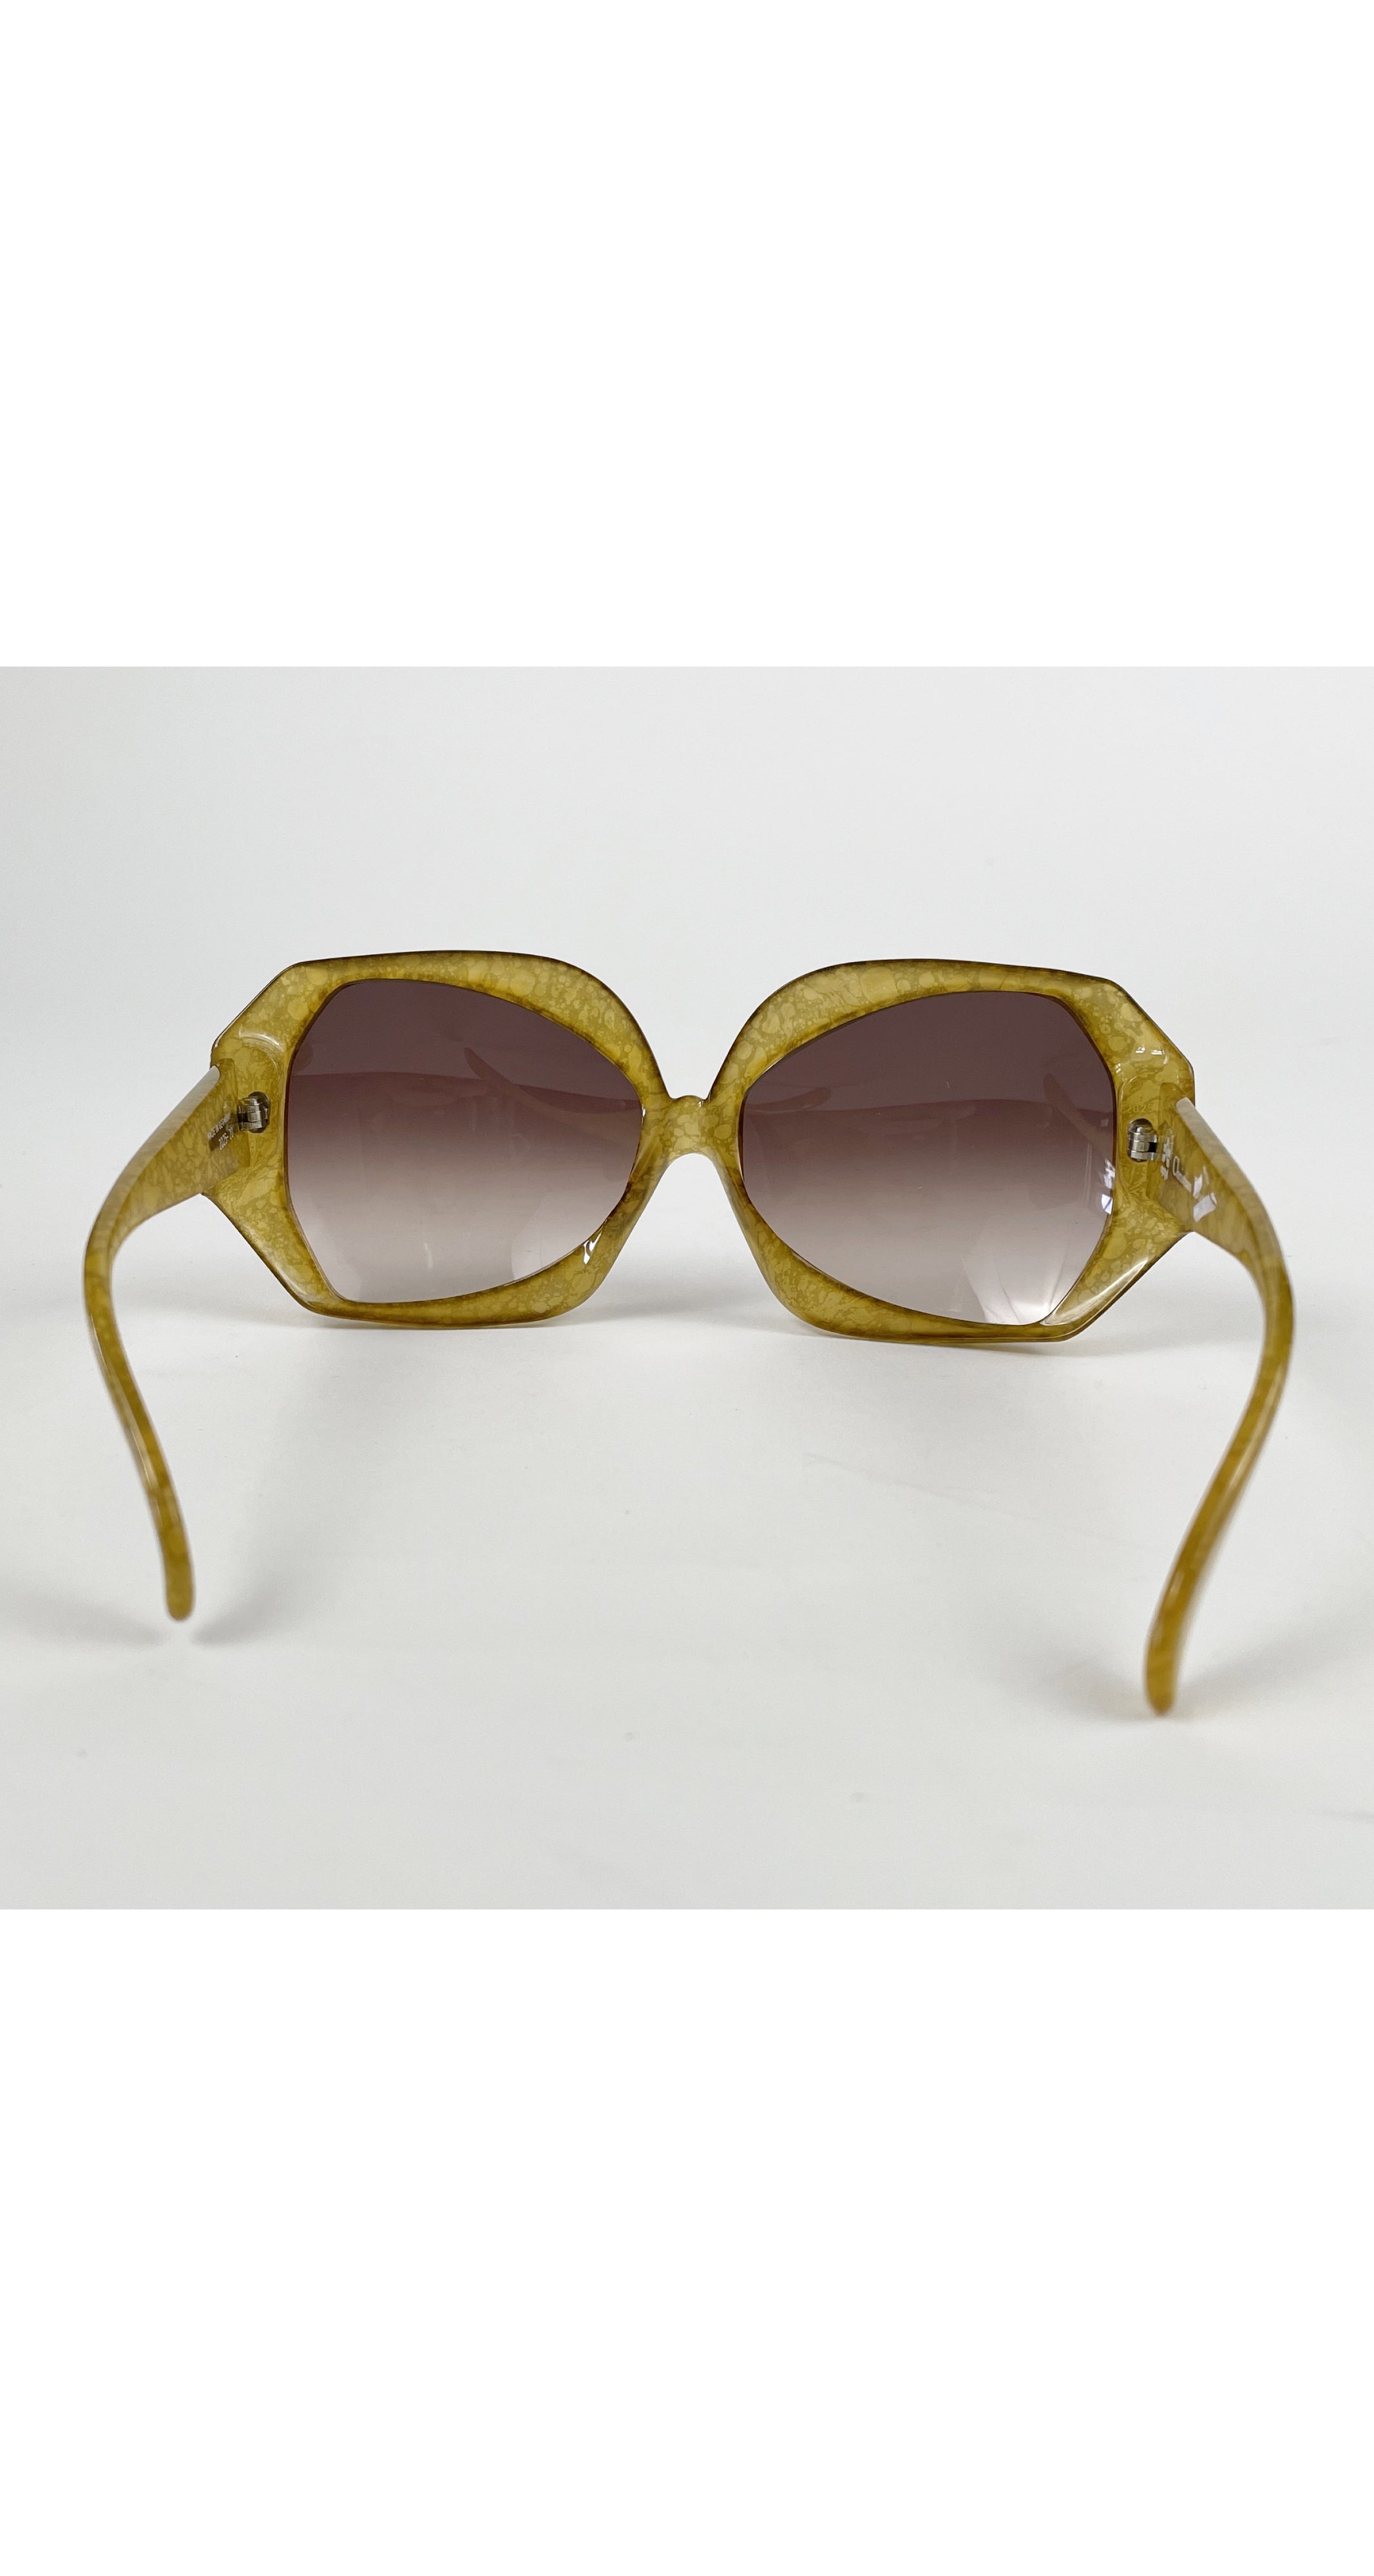 1976 Ad Campaign "2025-20" Optyl Dijon Sunglasses